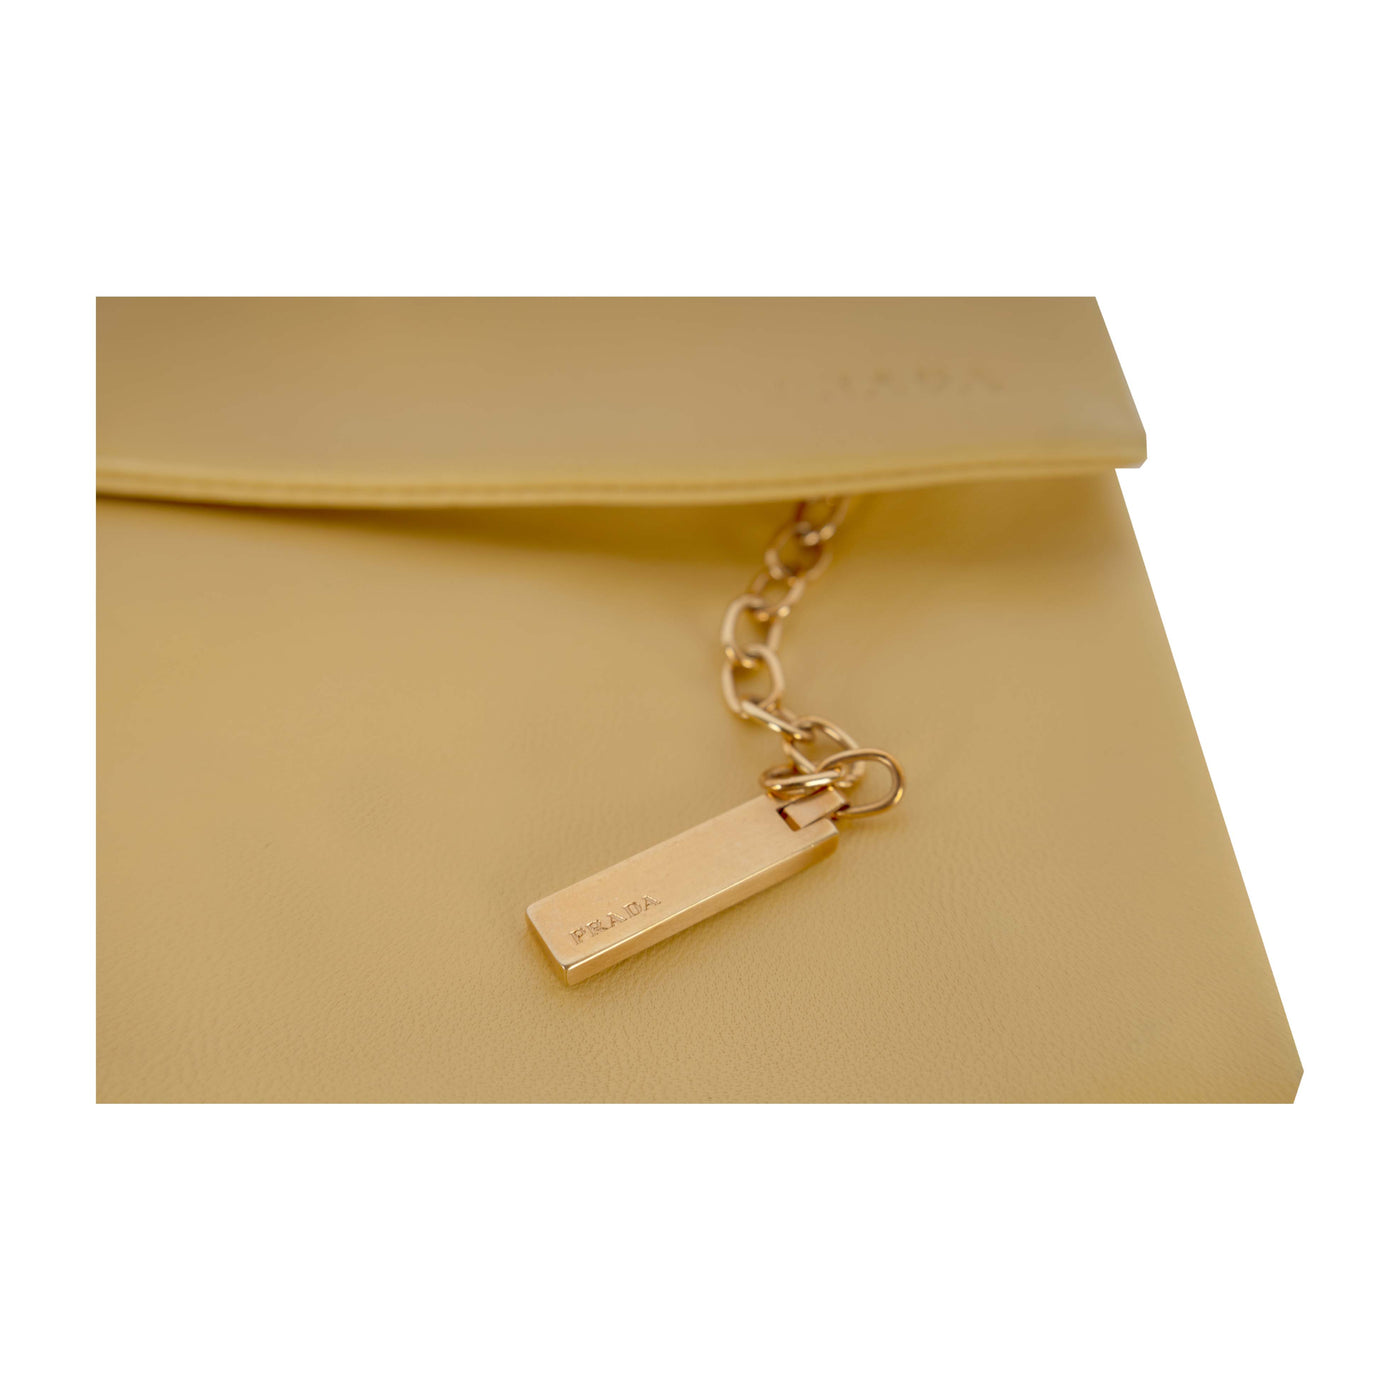 Secondhand Prada Envelope Clutch